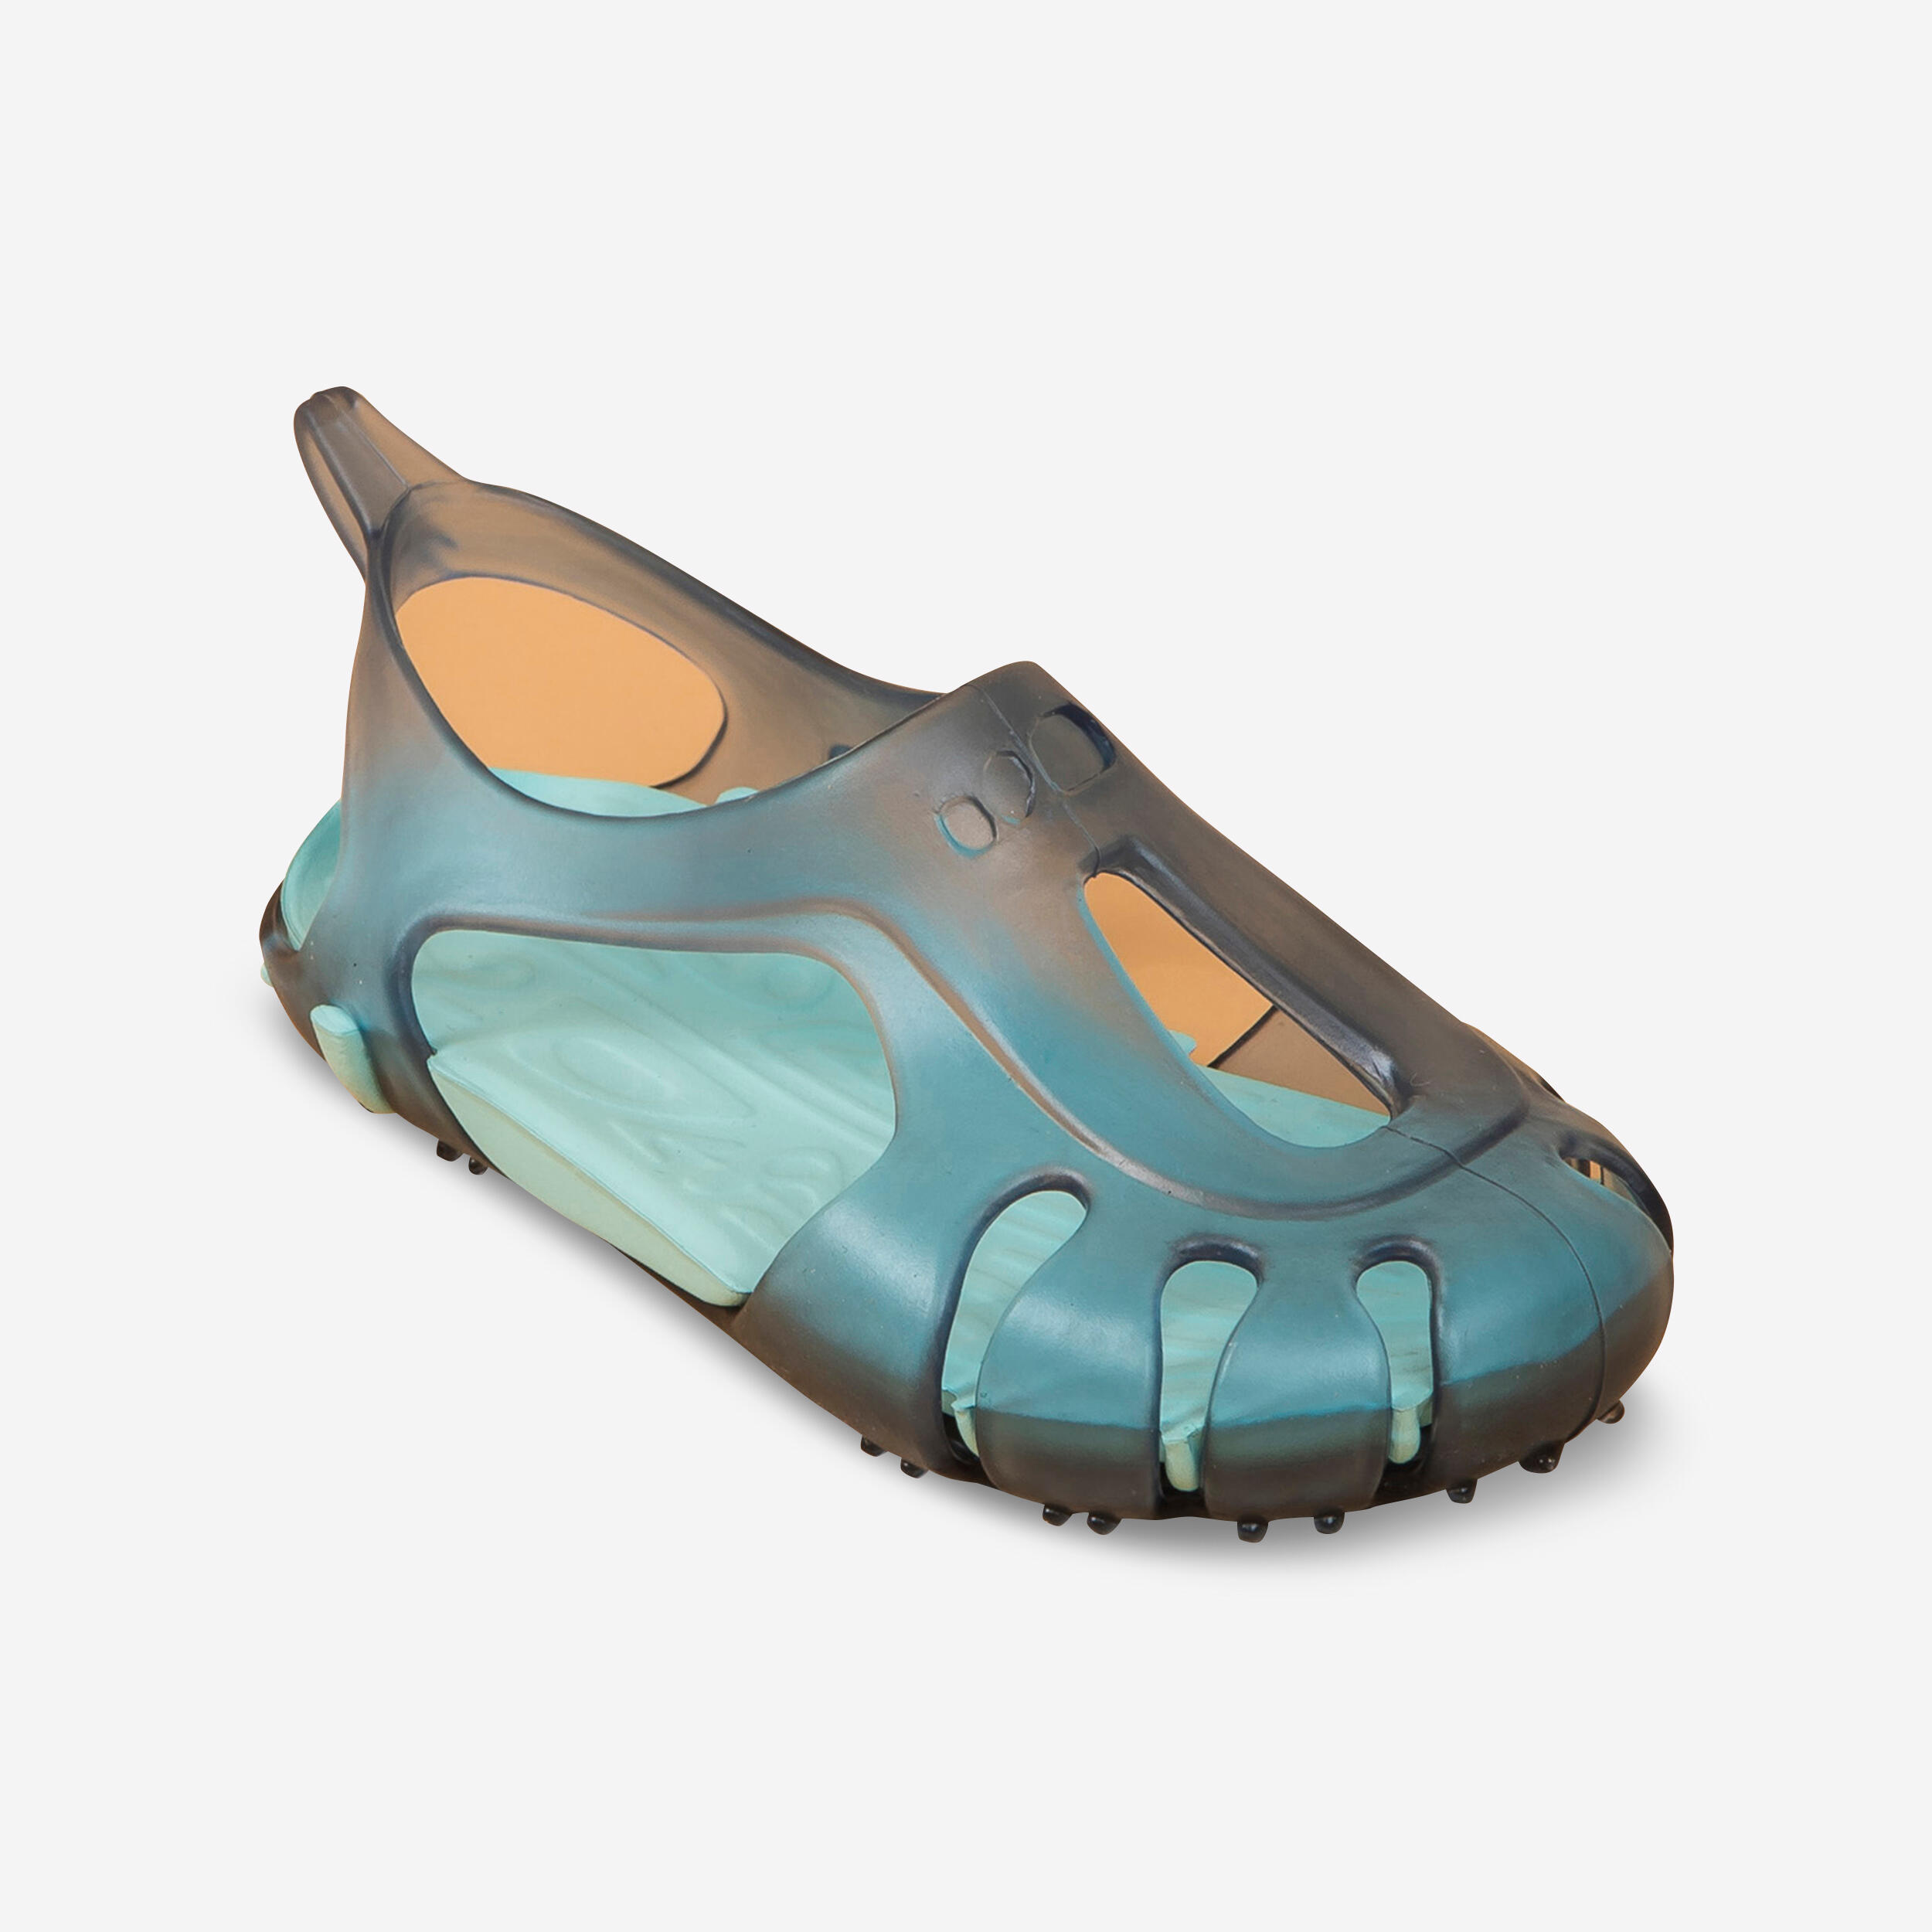 review: Decathlon Bivouac Trek 500 barefoot sandals - Forclaz specialty?